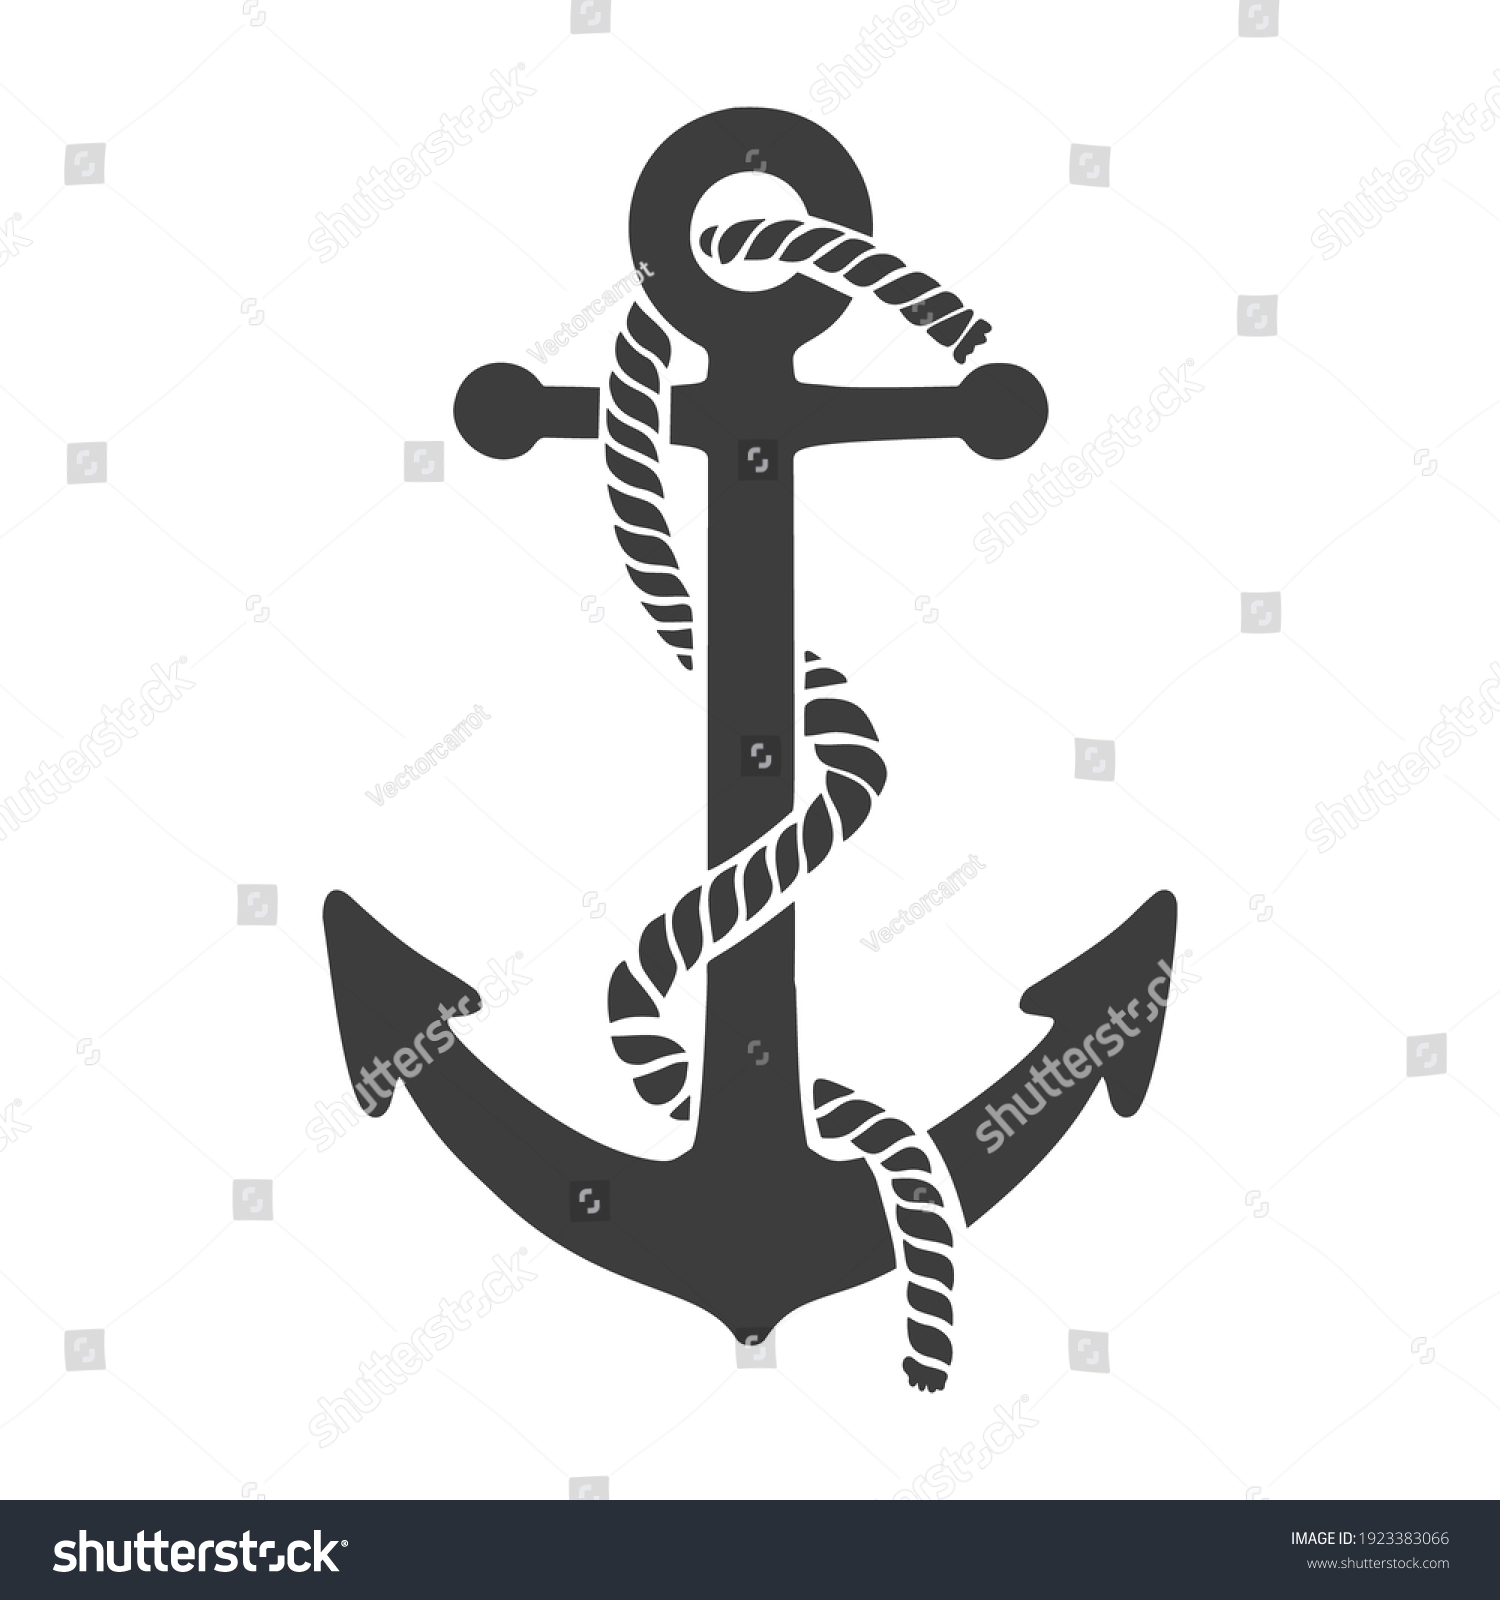 SVG of Illustration of the anchor in engraving style. Design element for poster, card, banner, sign, logo. Vector illustration svg